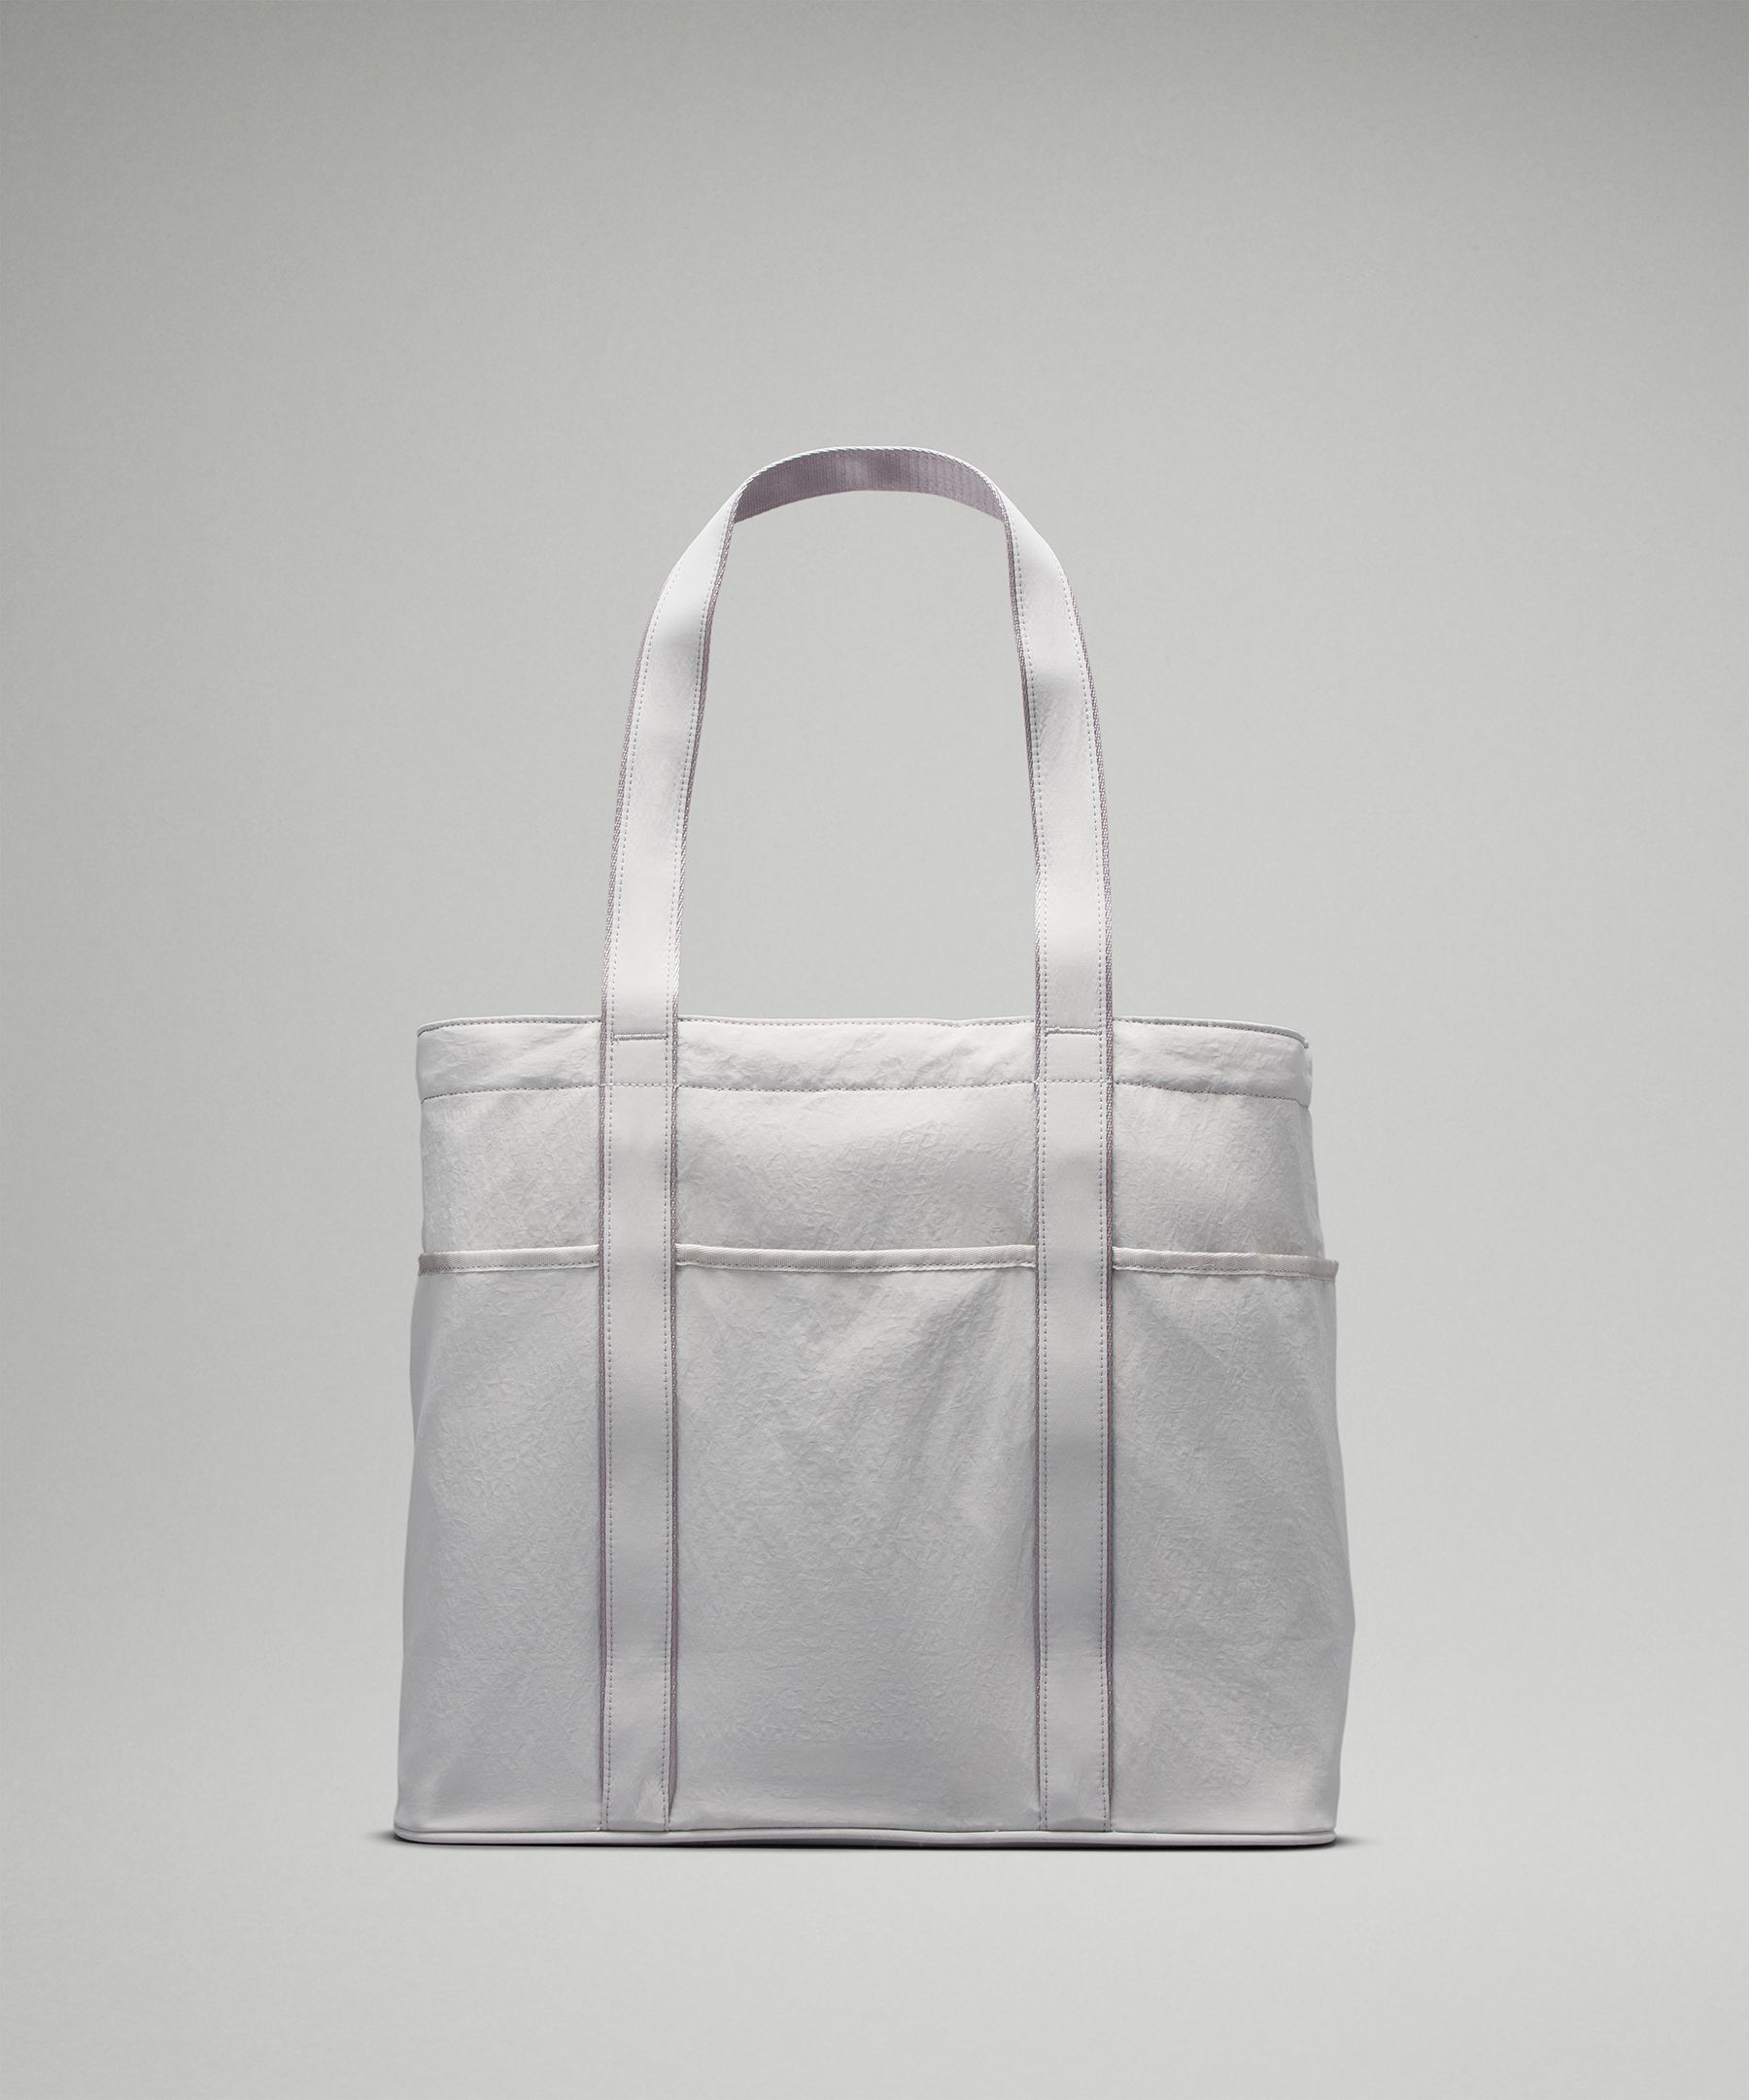 Lululemon Daily Multi-Pocket Canvas Tote Bag 20L - Black/White Opal Cotton Fabric